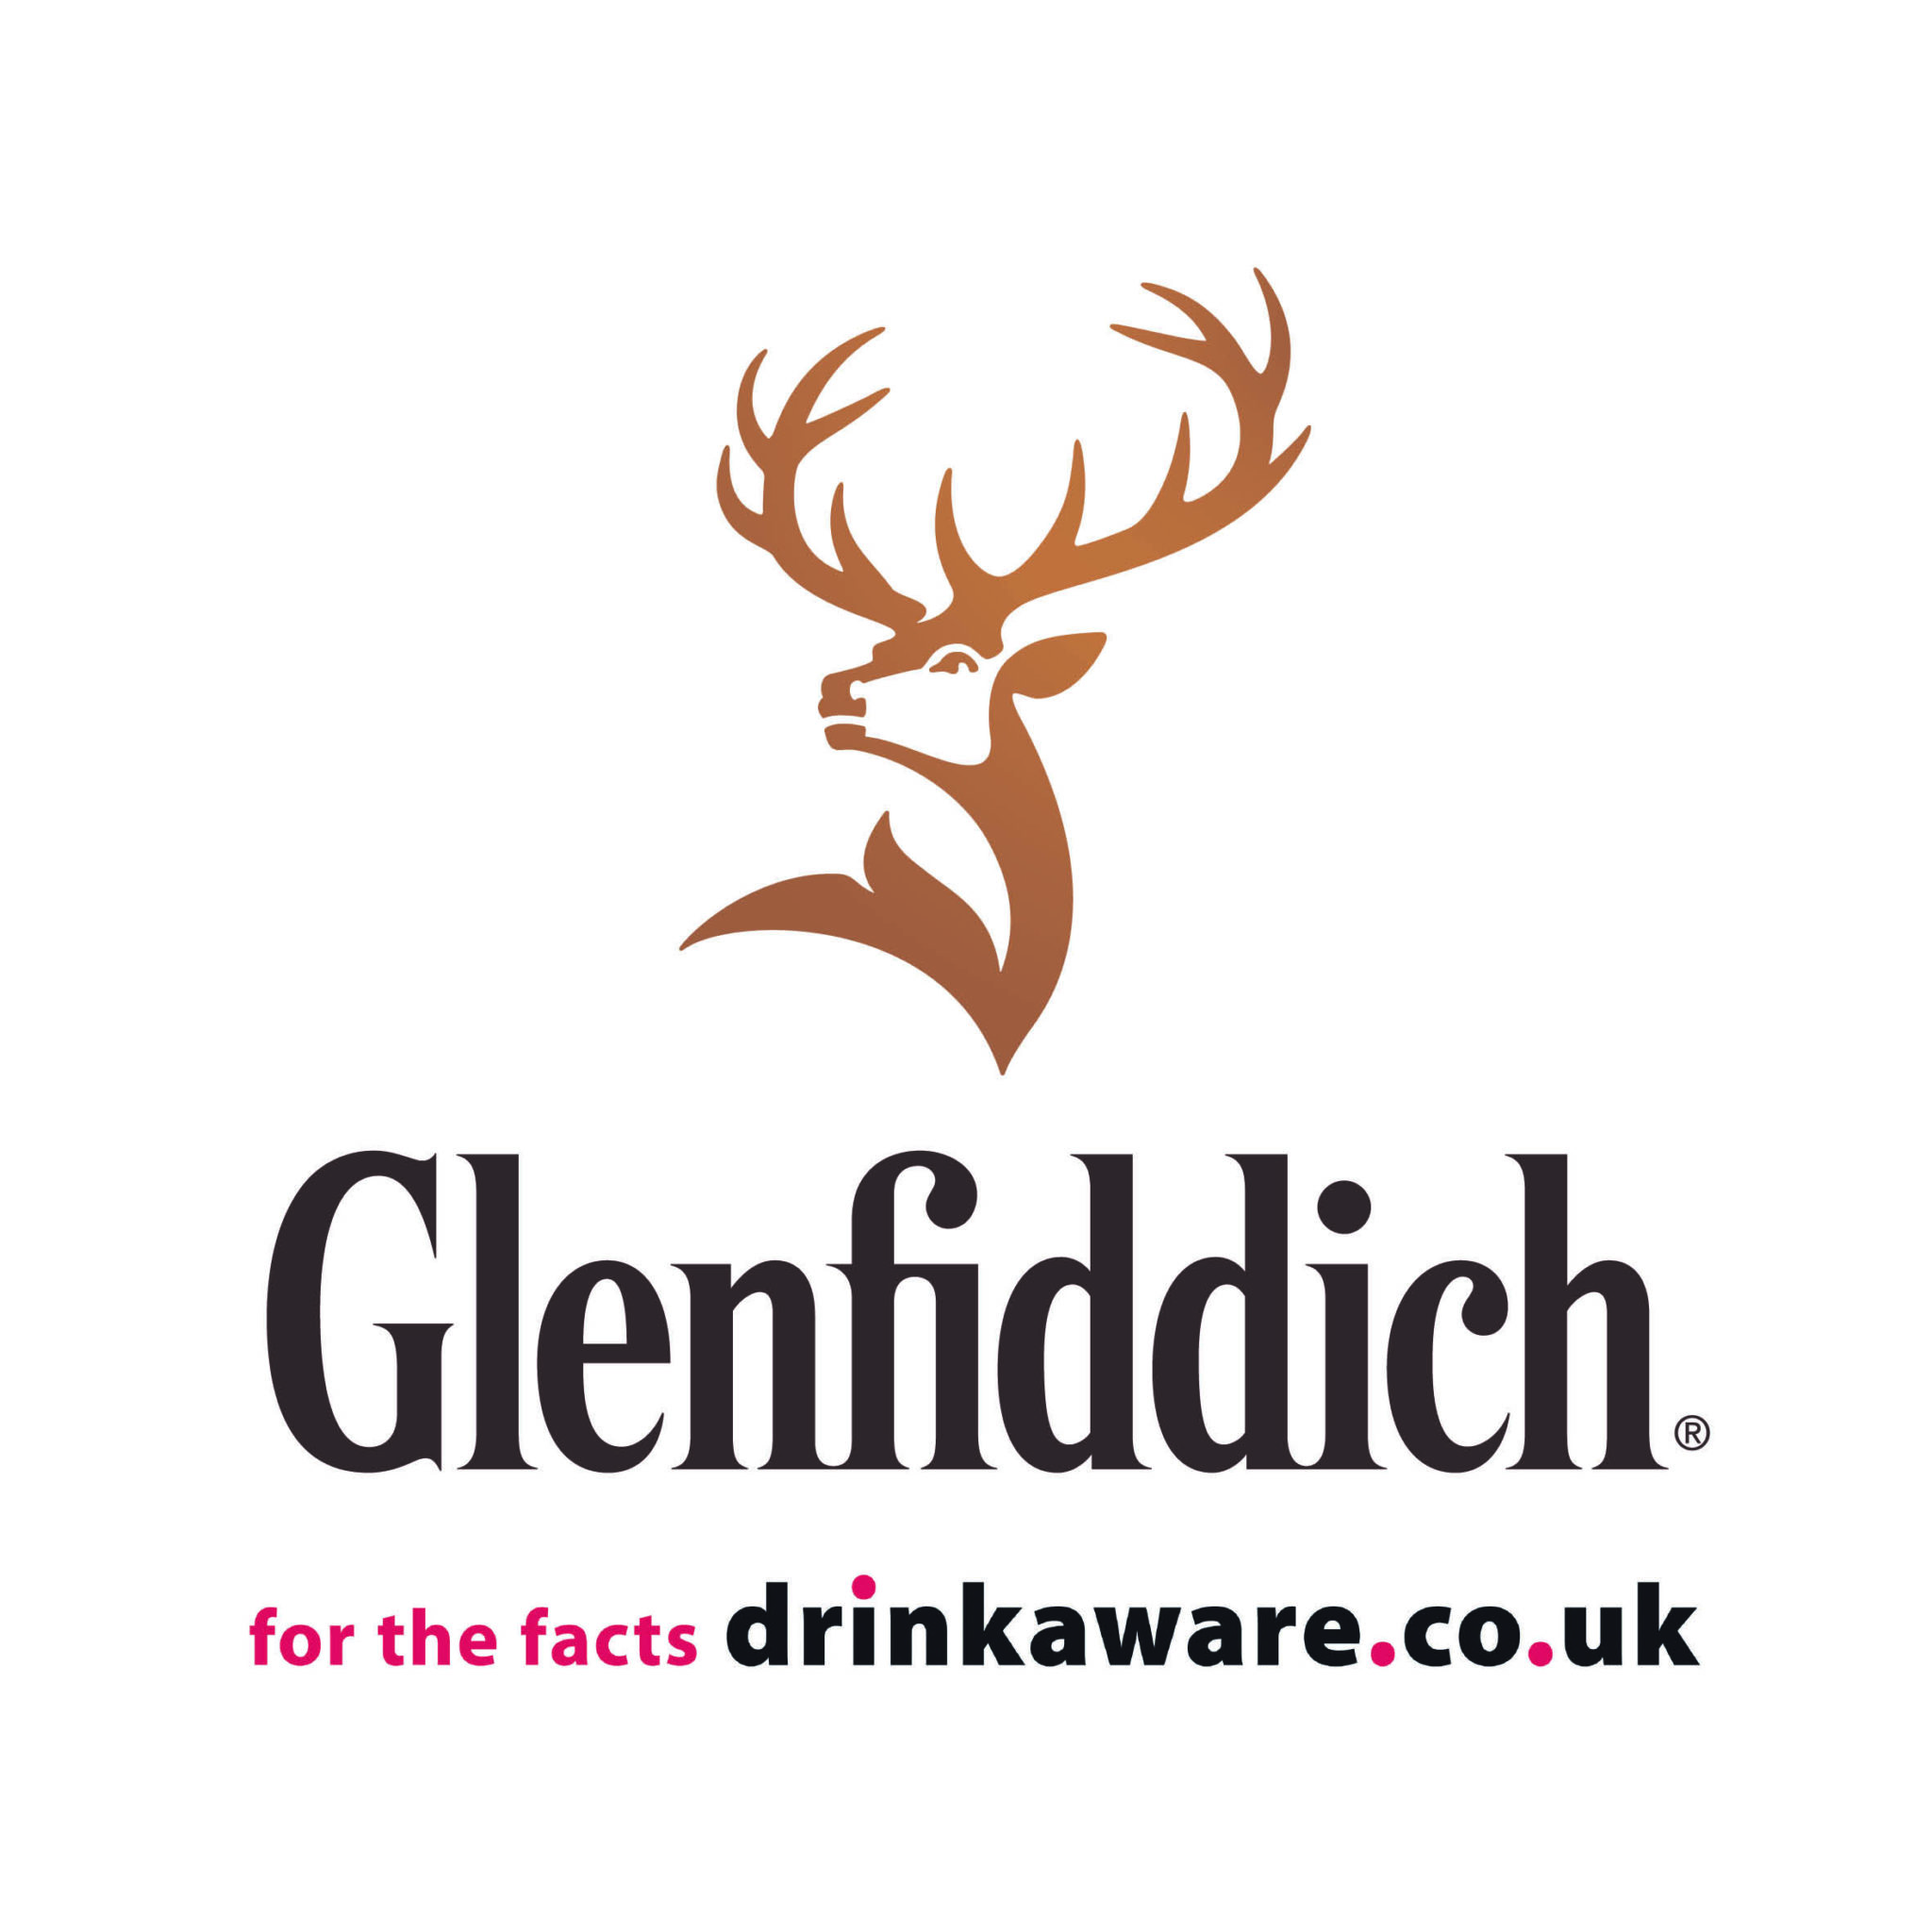 GlenfiddichLogo_drinkaware